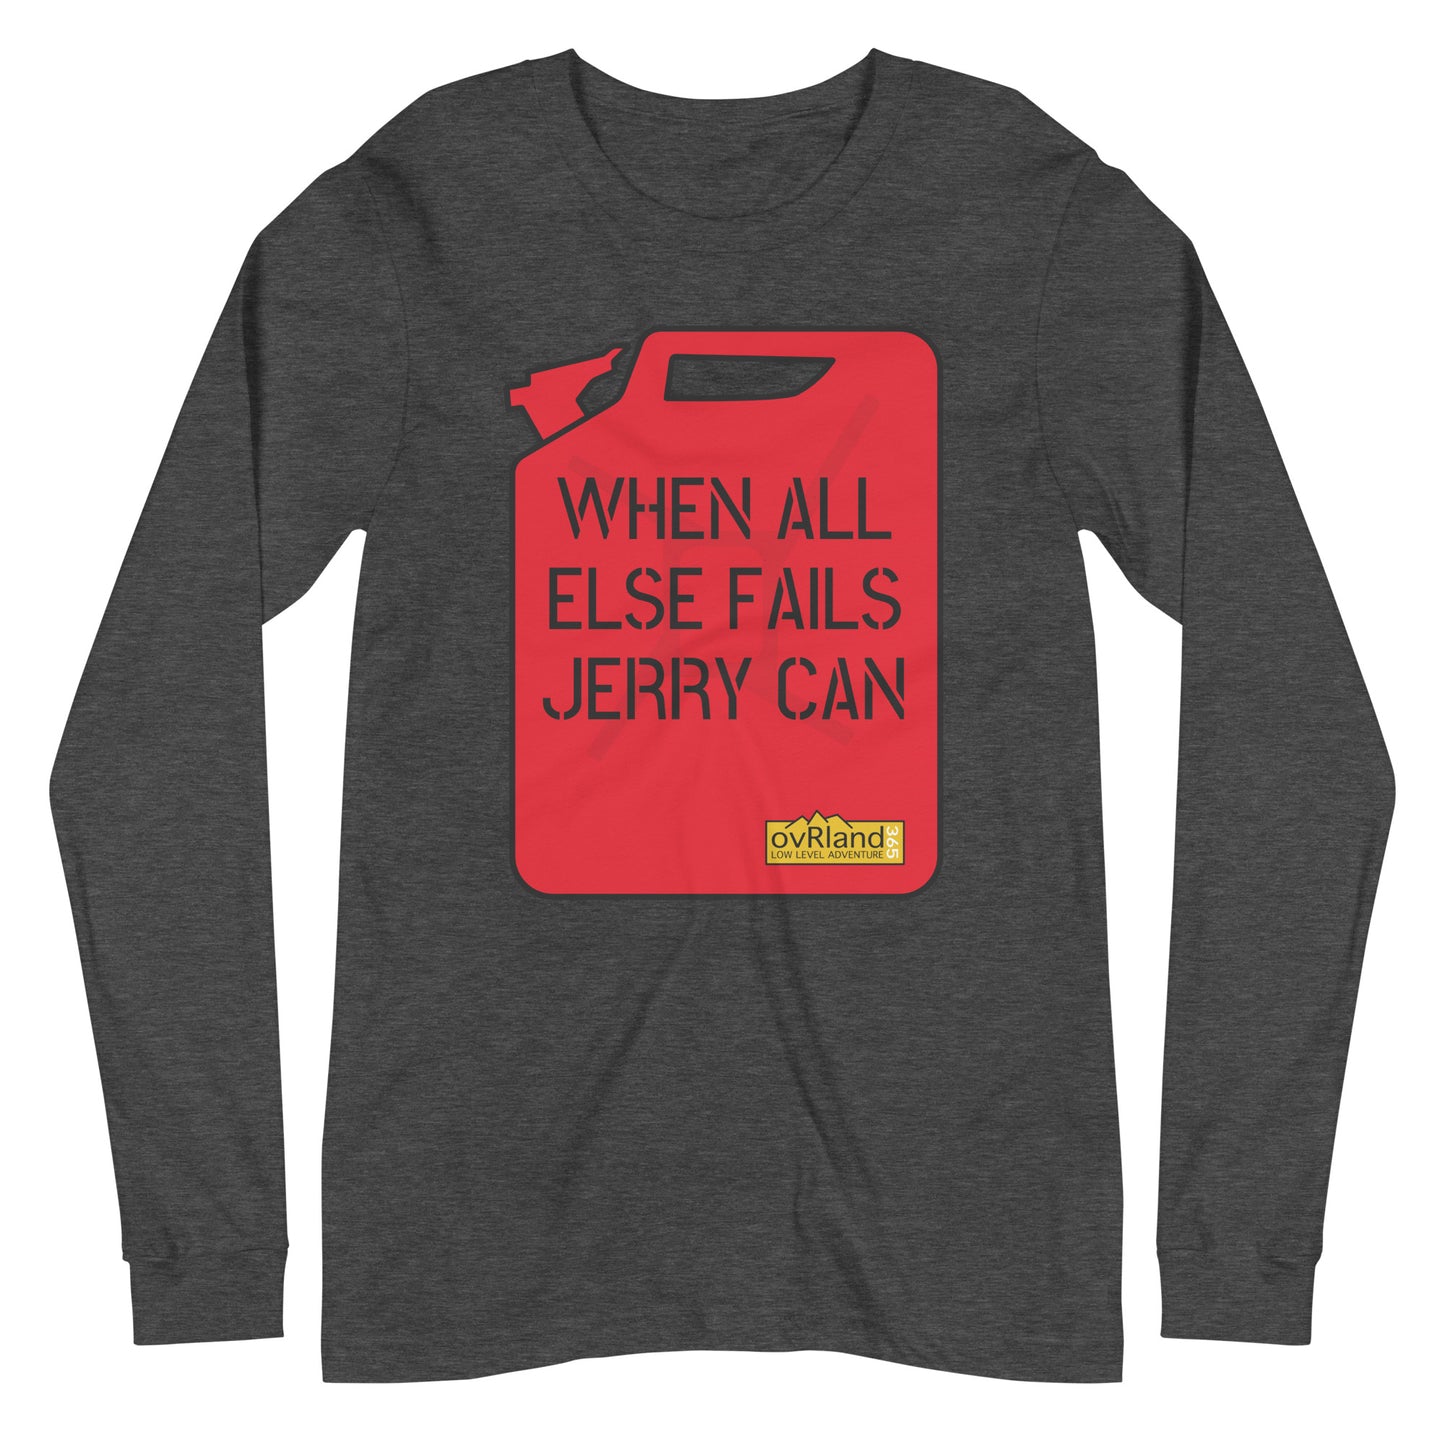 "WHEN ALL ELSE FAILS, JERRY CAN" - Dark Grey long-sleeve. overland365.com